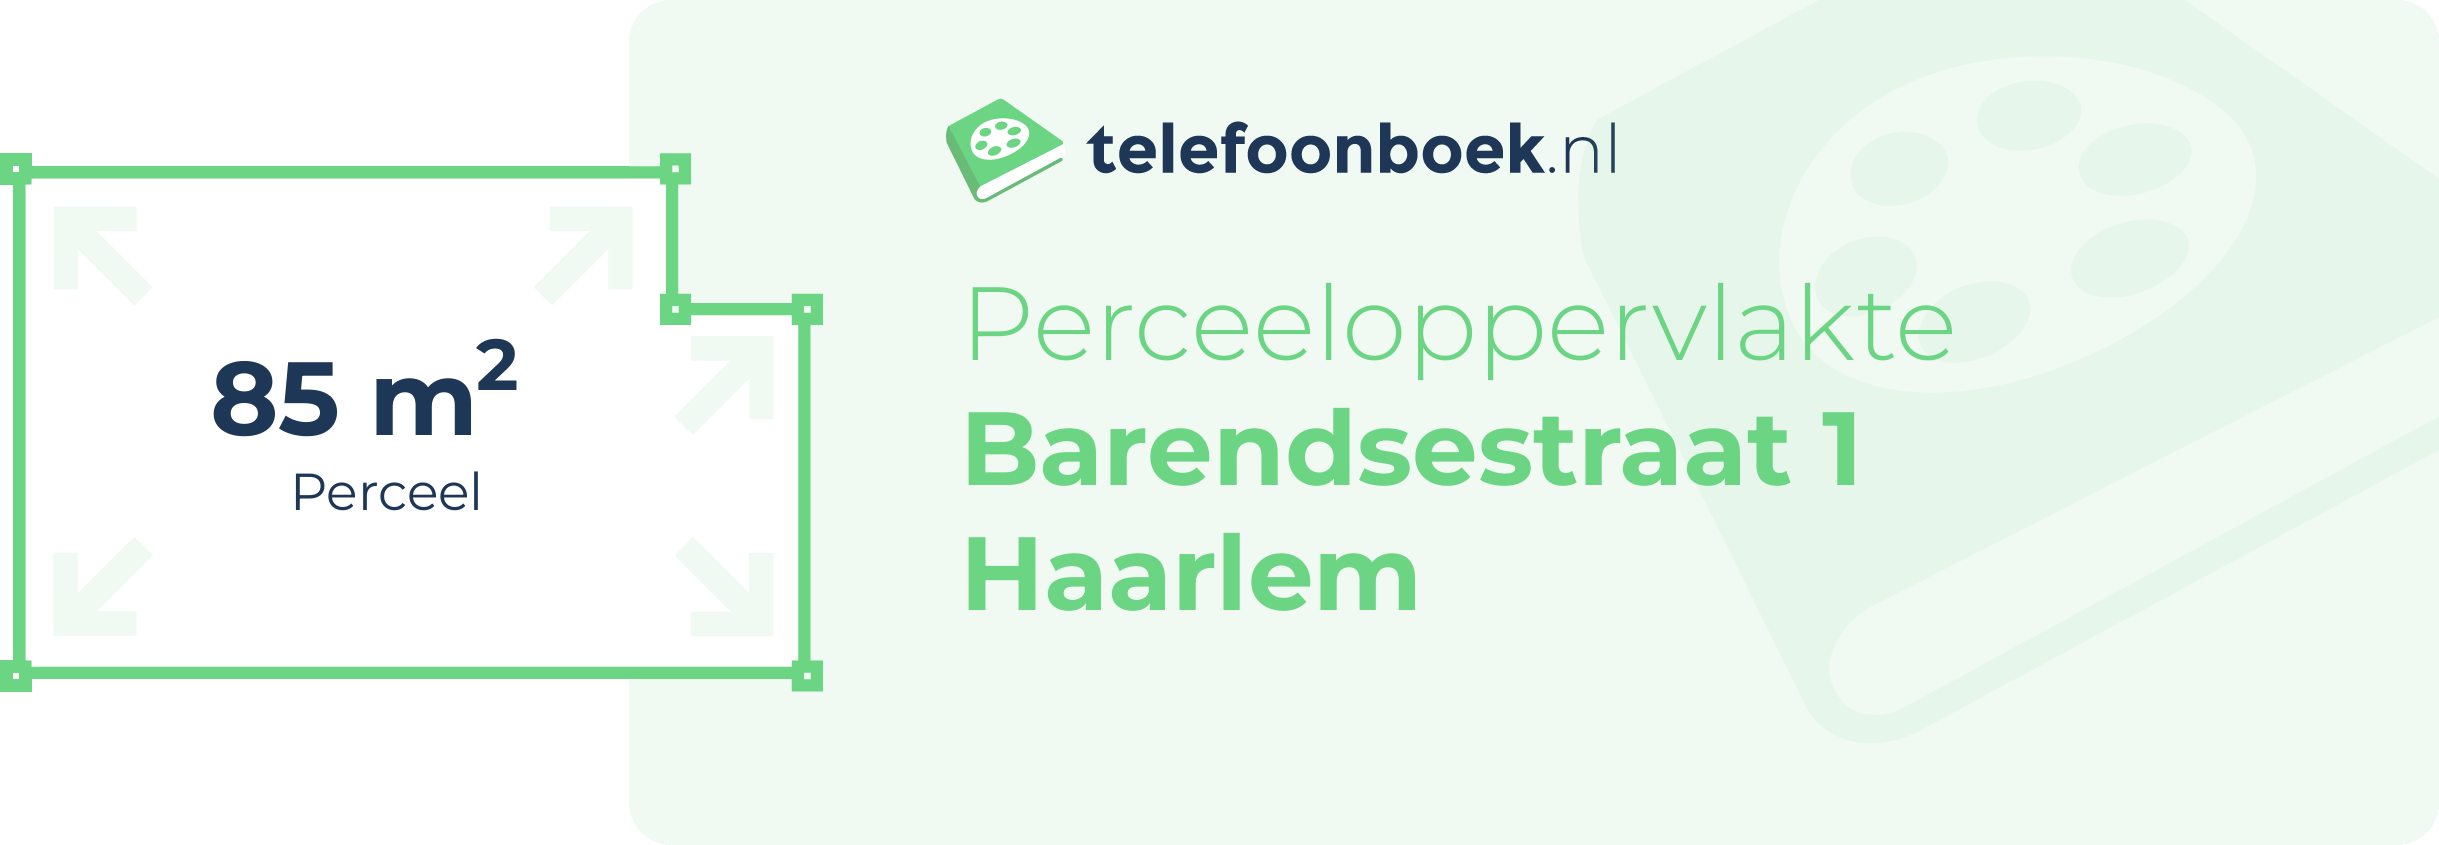 Perceeloppervlakte Barendsestraat 1 Haarlem